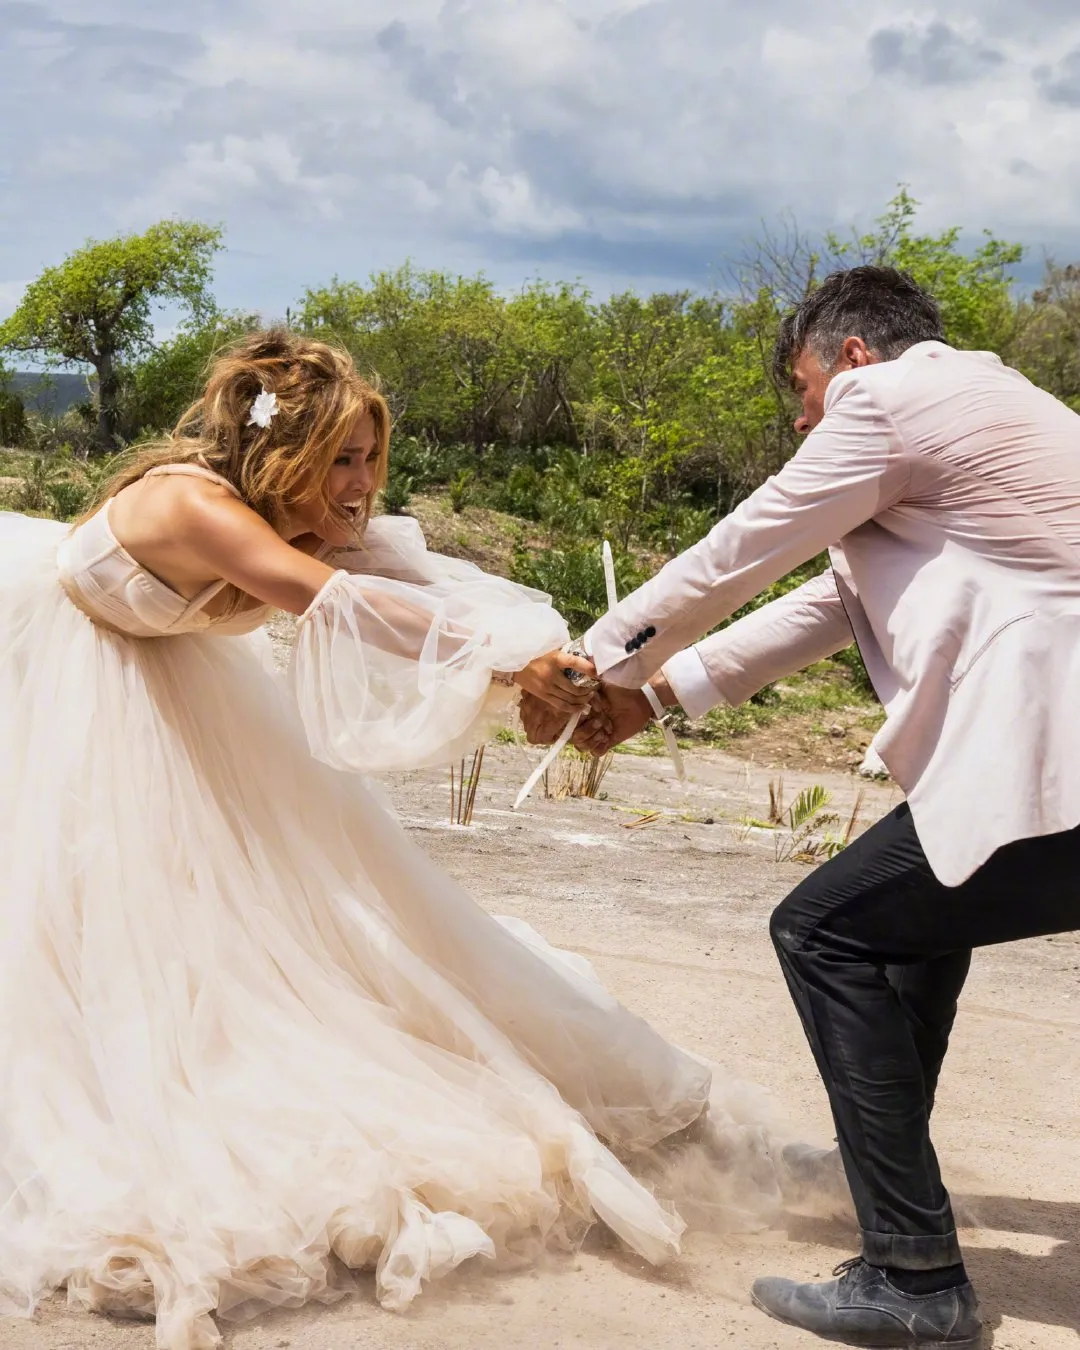 Action Comedy 'Shotgun Wedding' Starring Jennifer Lopez and Josh Duhamel Releases Stills | FMV6